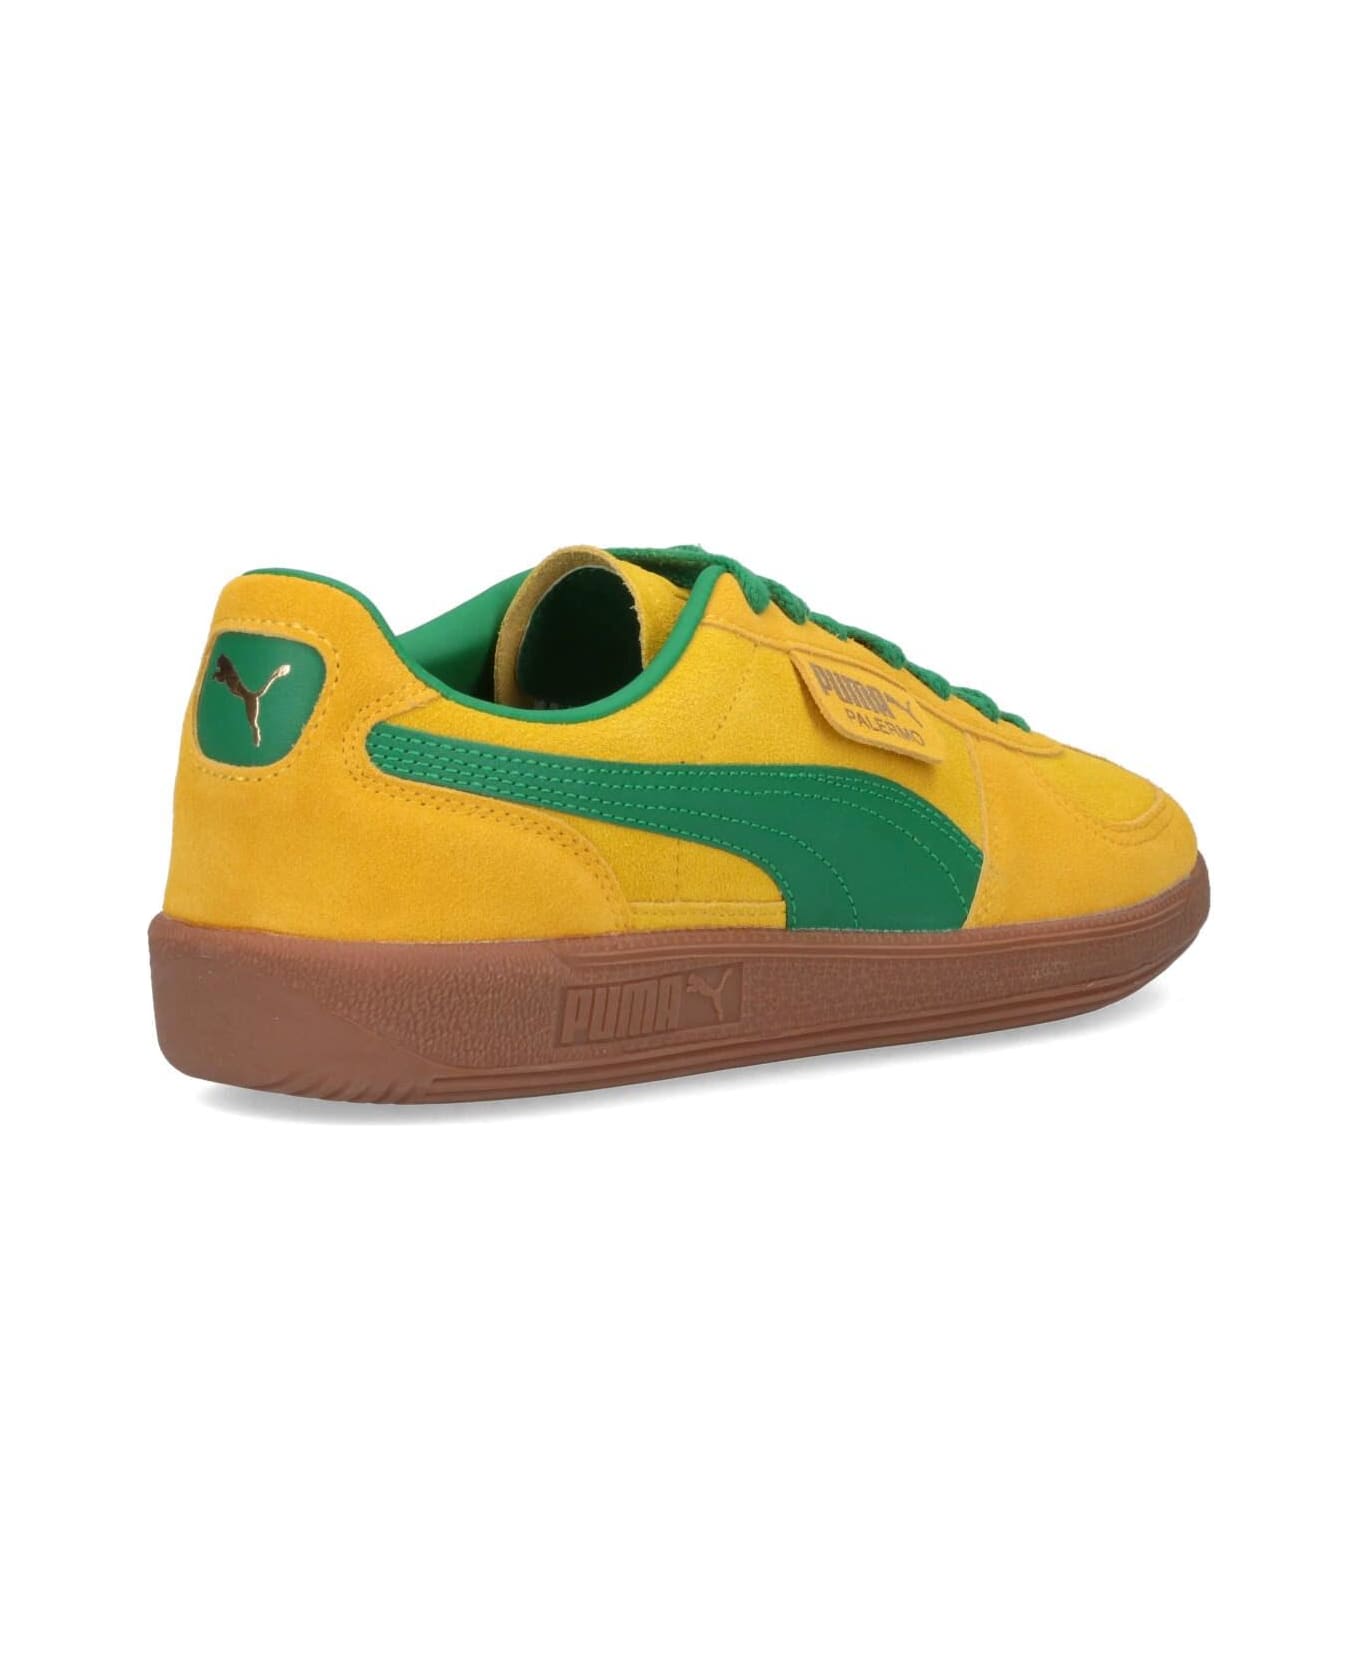 Puma 'palermo' Sneakers - Yellow スニーカー